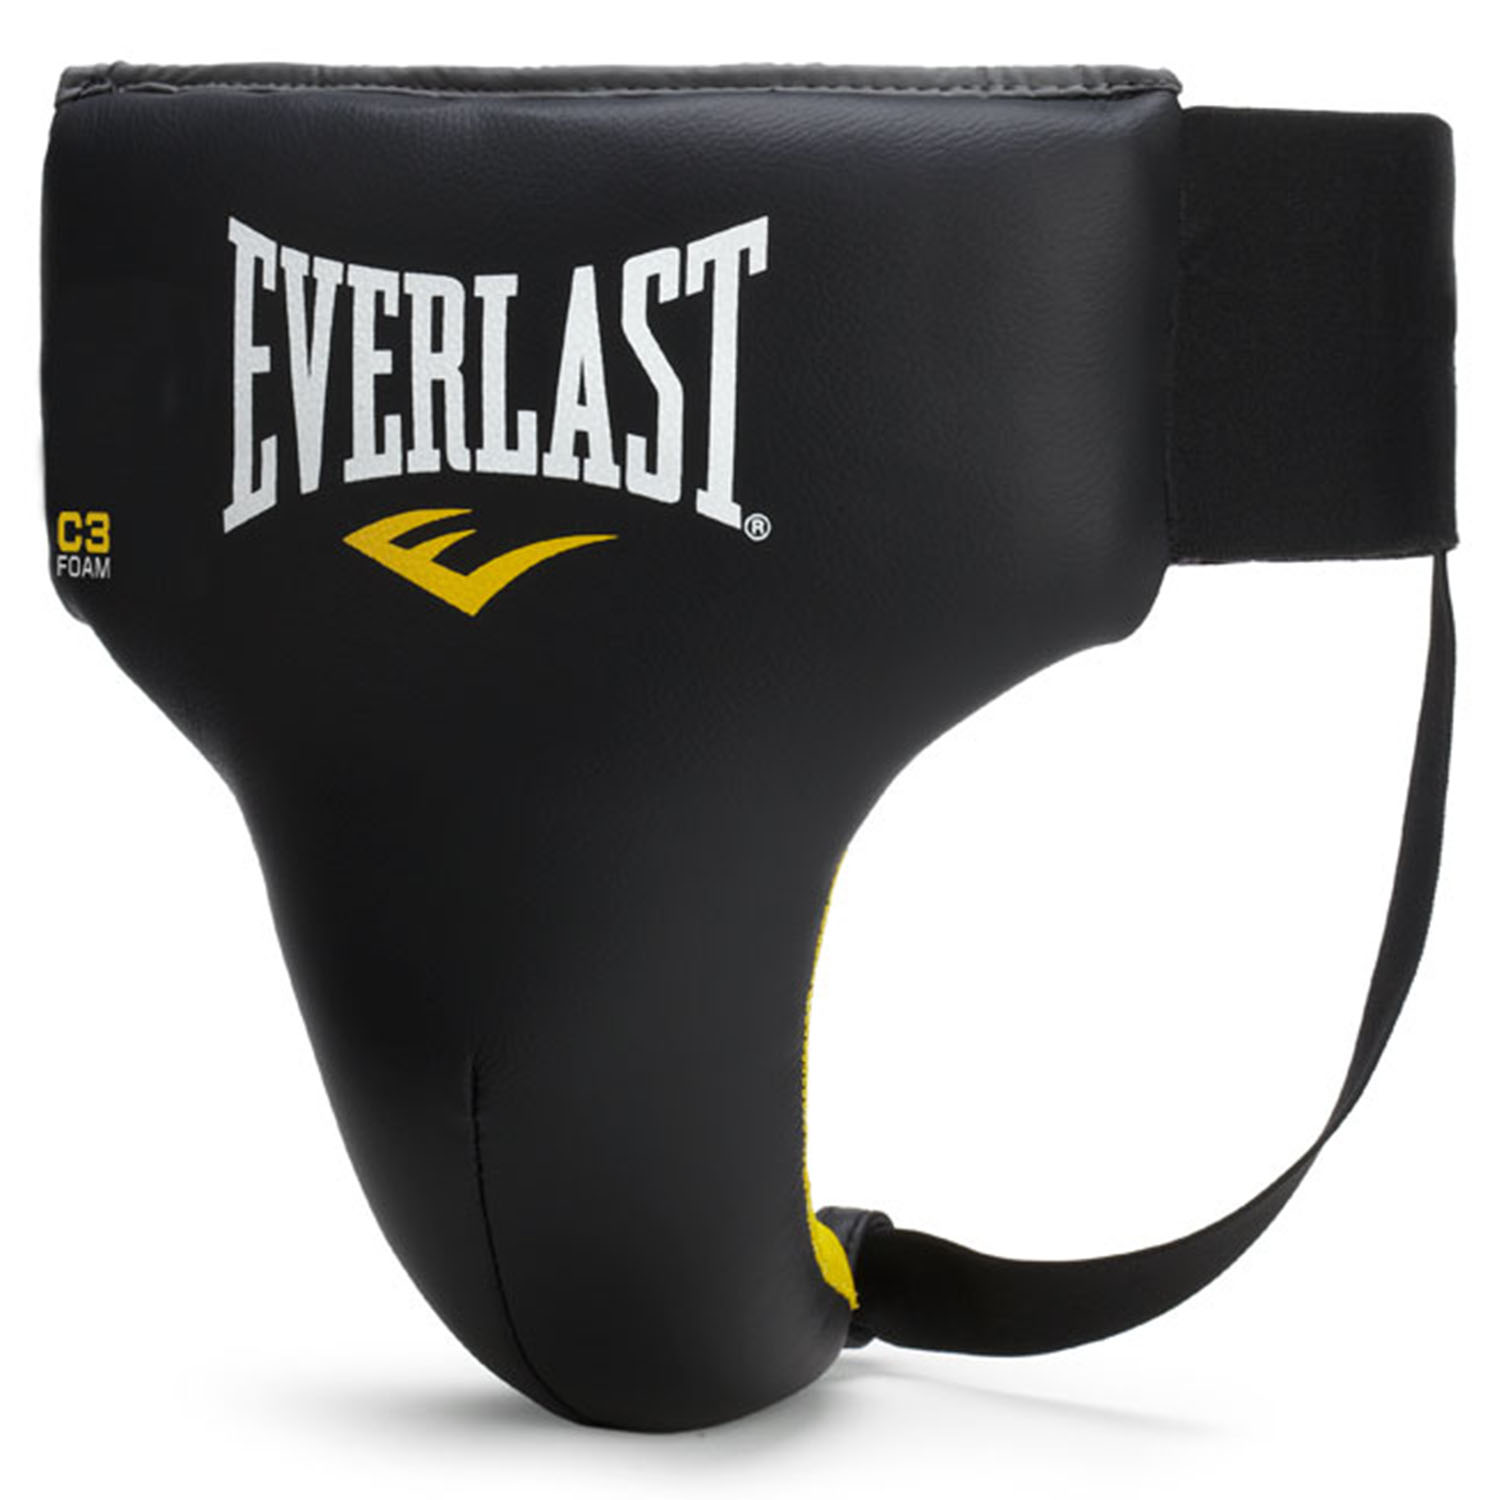 Everlast Groin Guard, C3 Pro, black